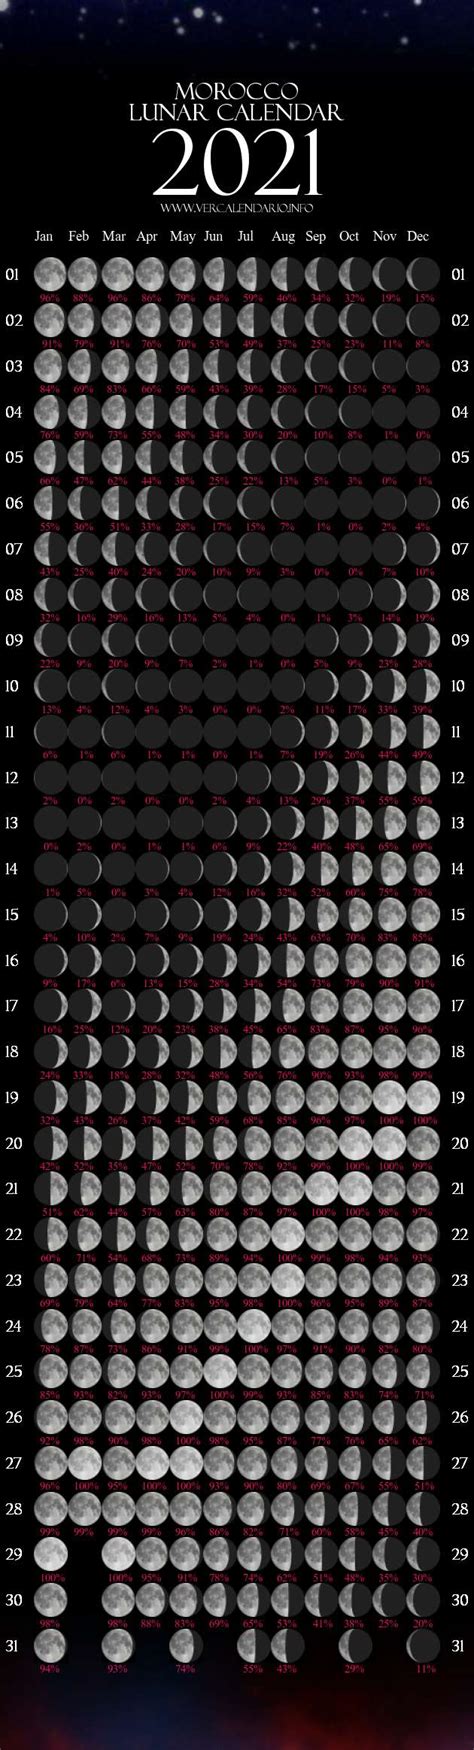 Printable pdf calendar of moon phases. Lunar Calendar 2021 (Morocco)